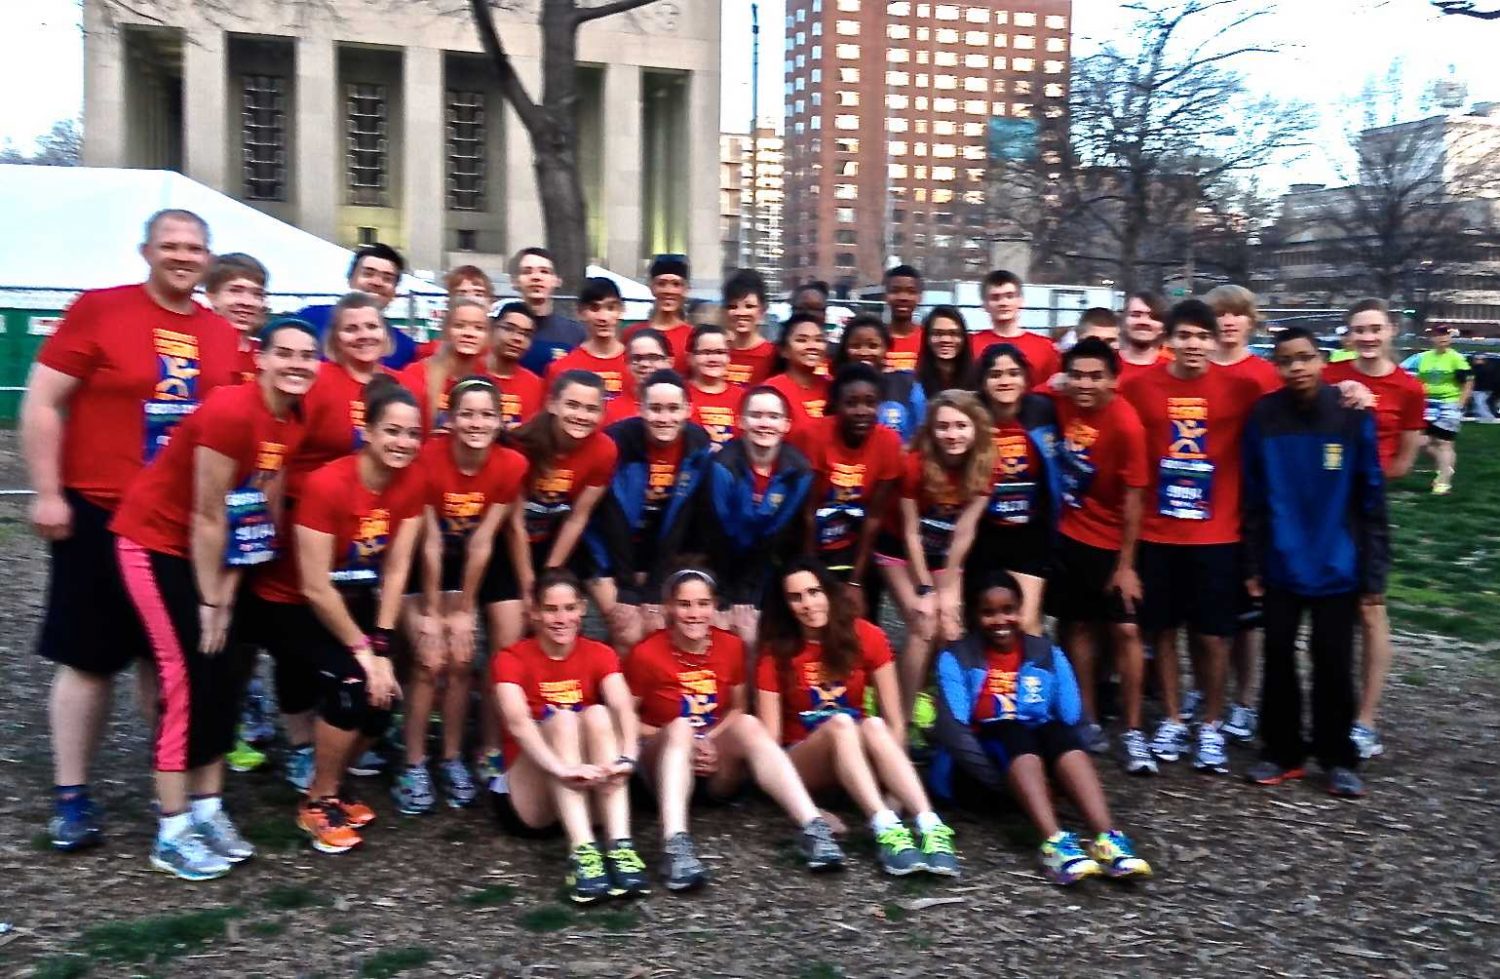 Pattonville Students and Staff Participate in GO! St. Louis Half Marathon